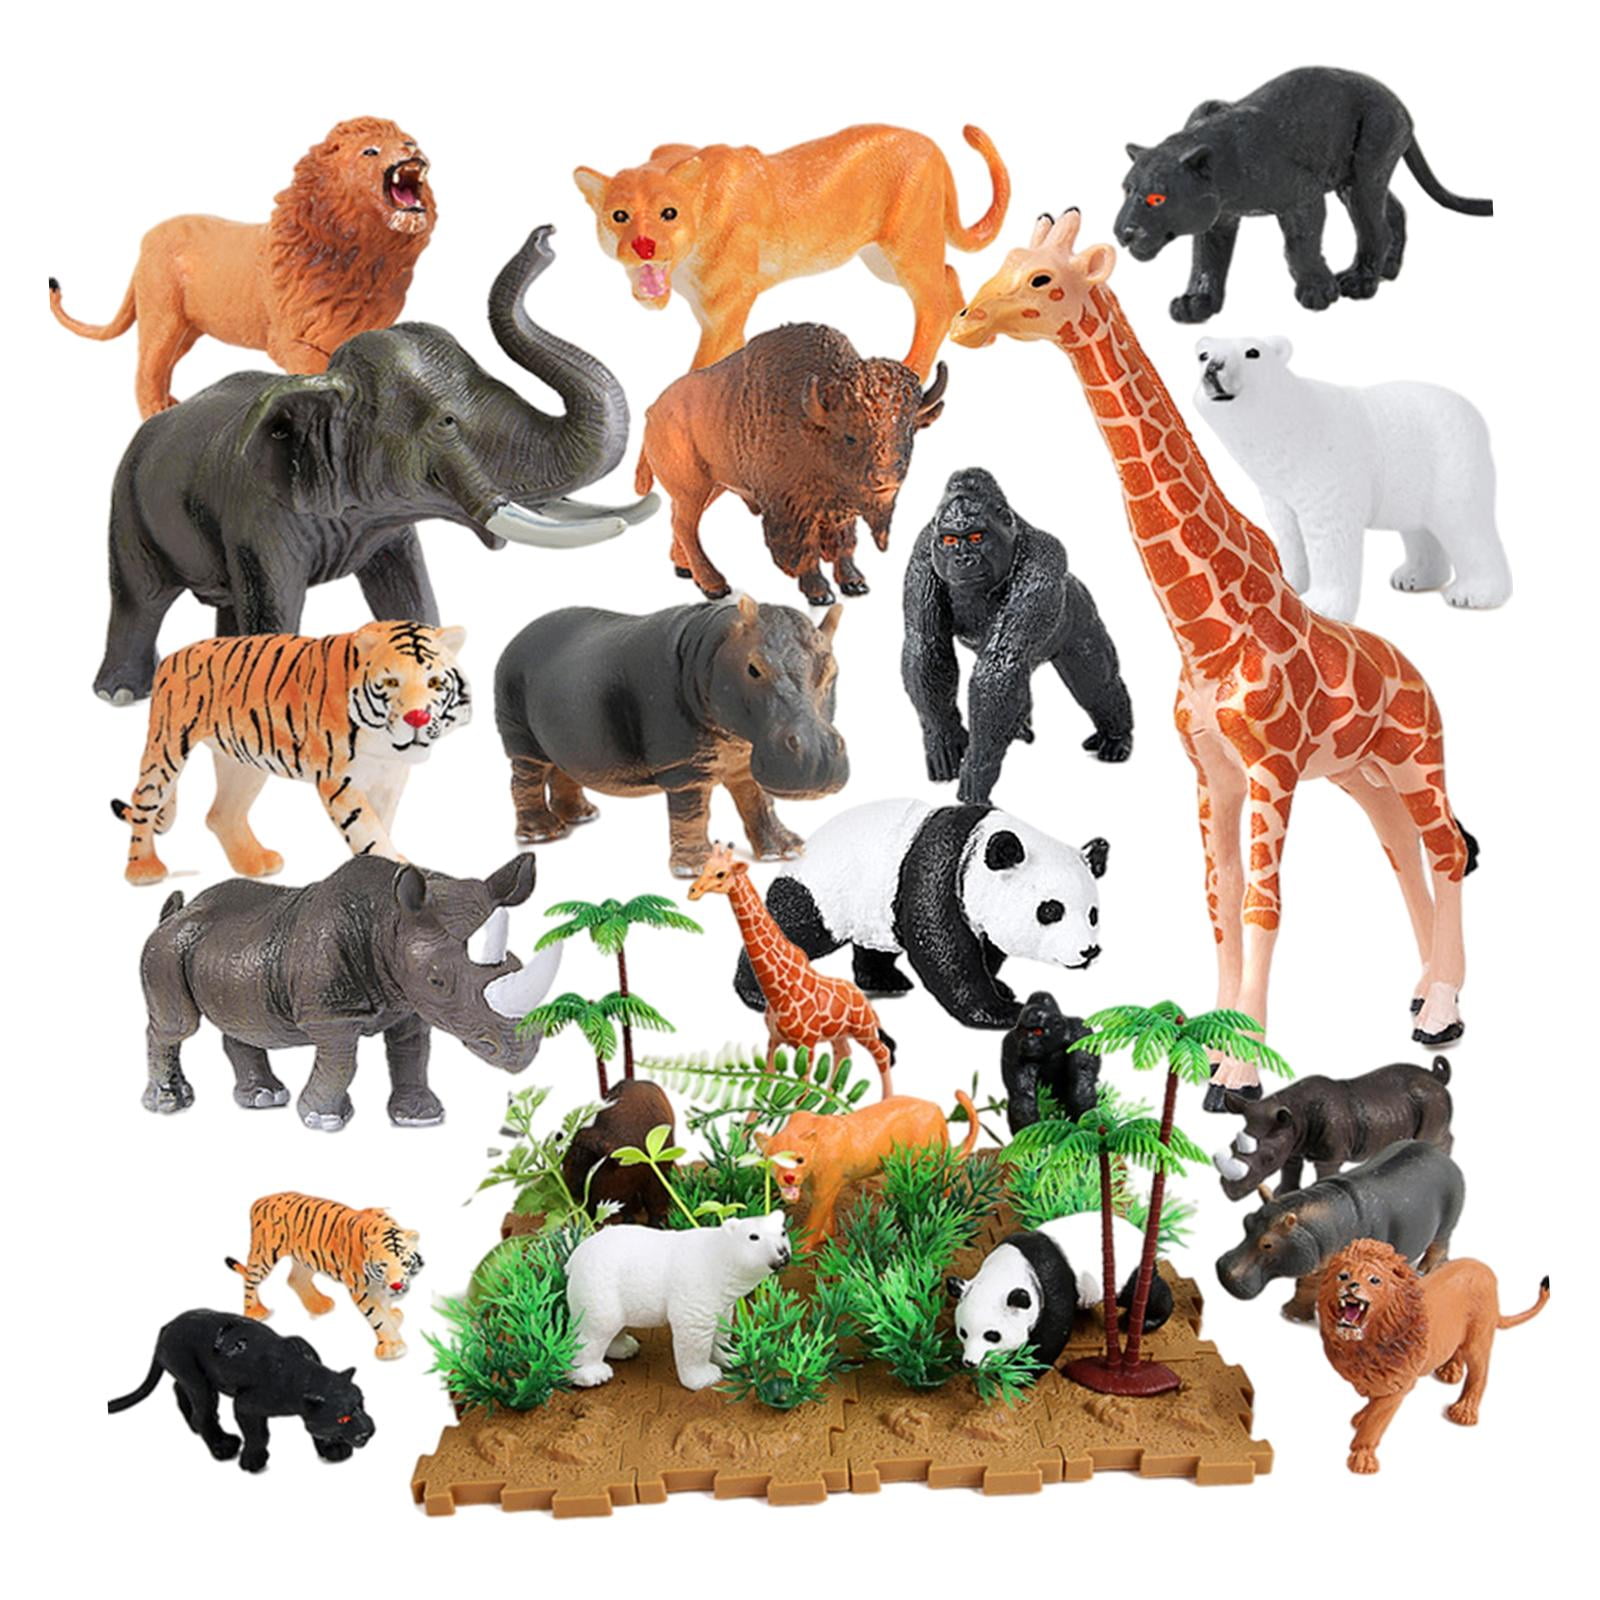 16pcs Plastic Zoo Animal Small Figure Toy Vegetable Farm Play House Kids Gift UK 